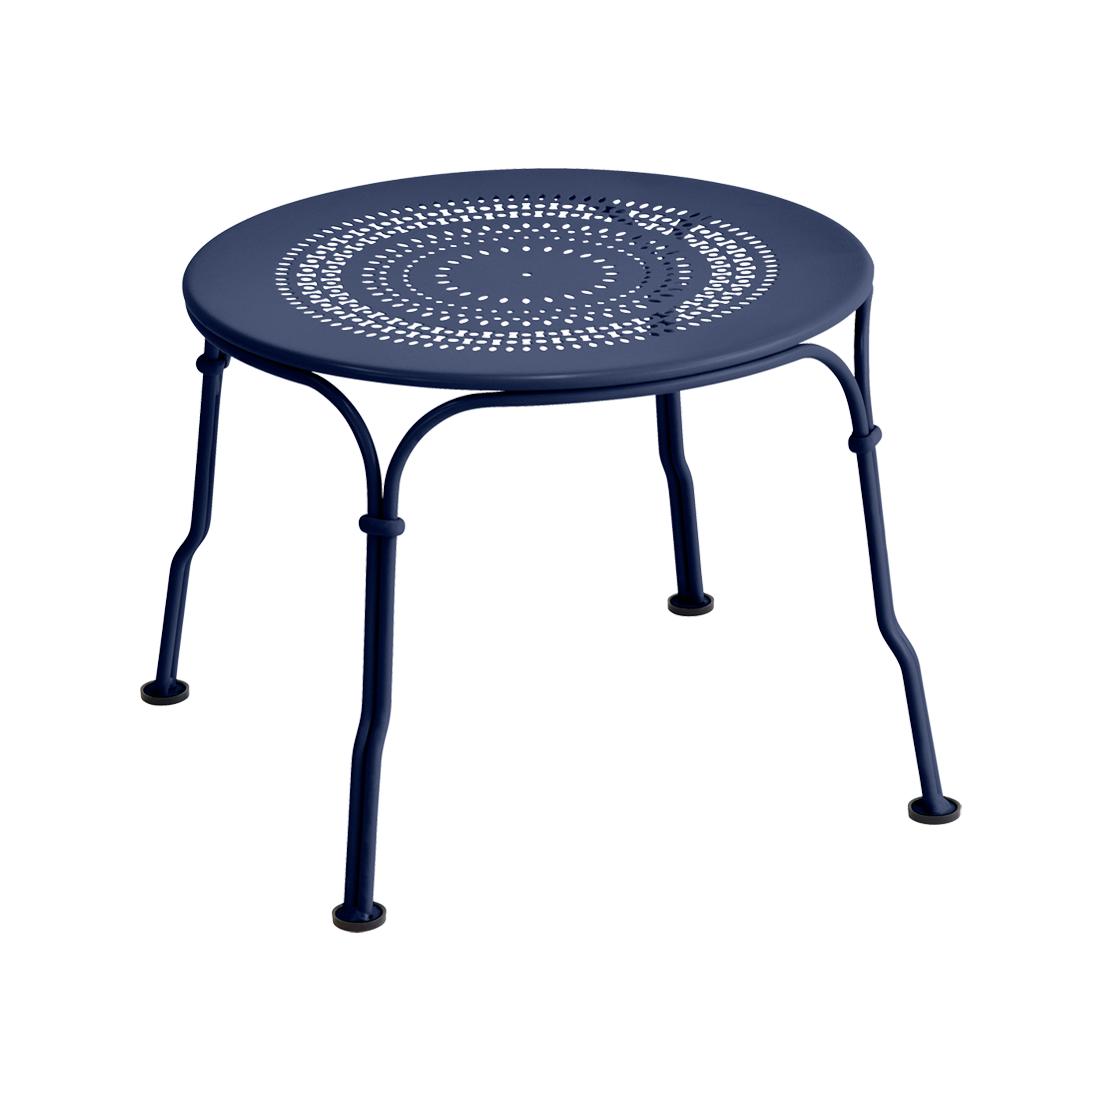 petite table basse table basse bleu, table basse metal